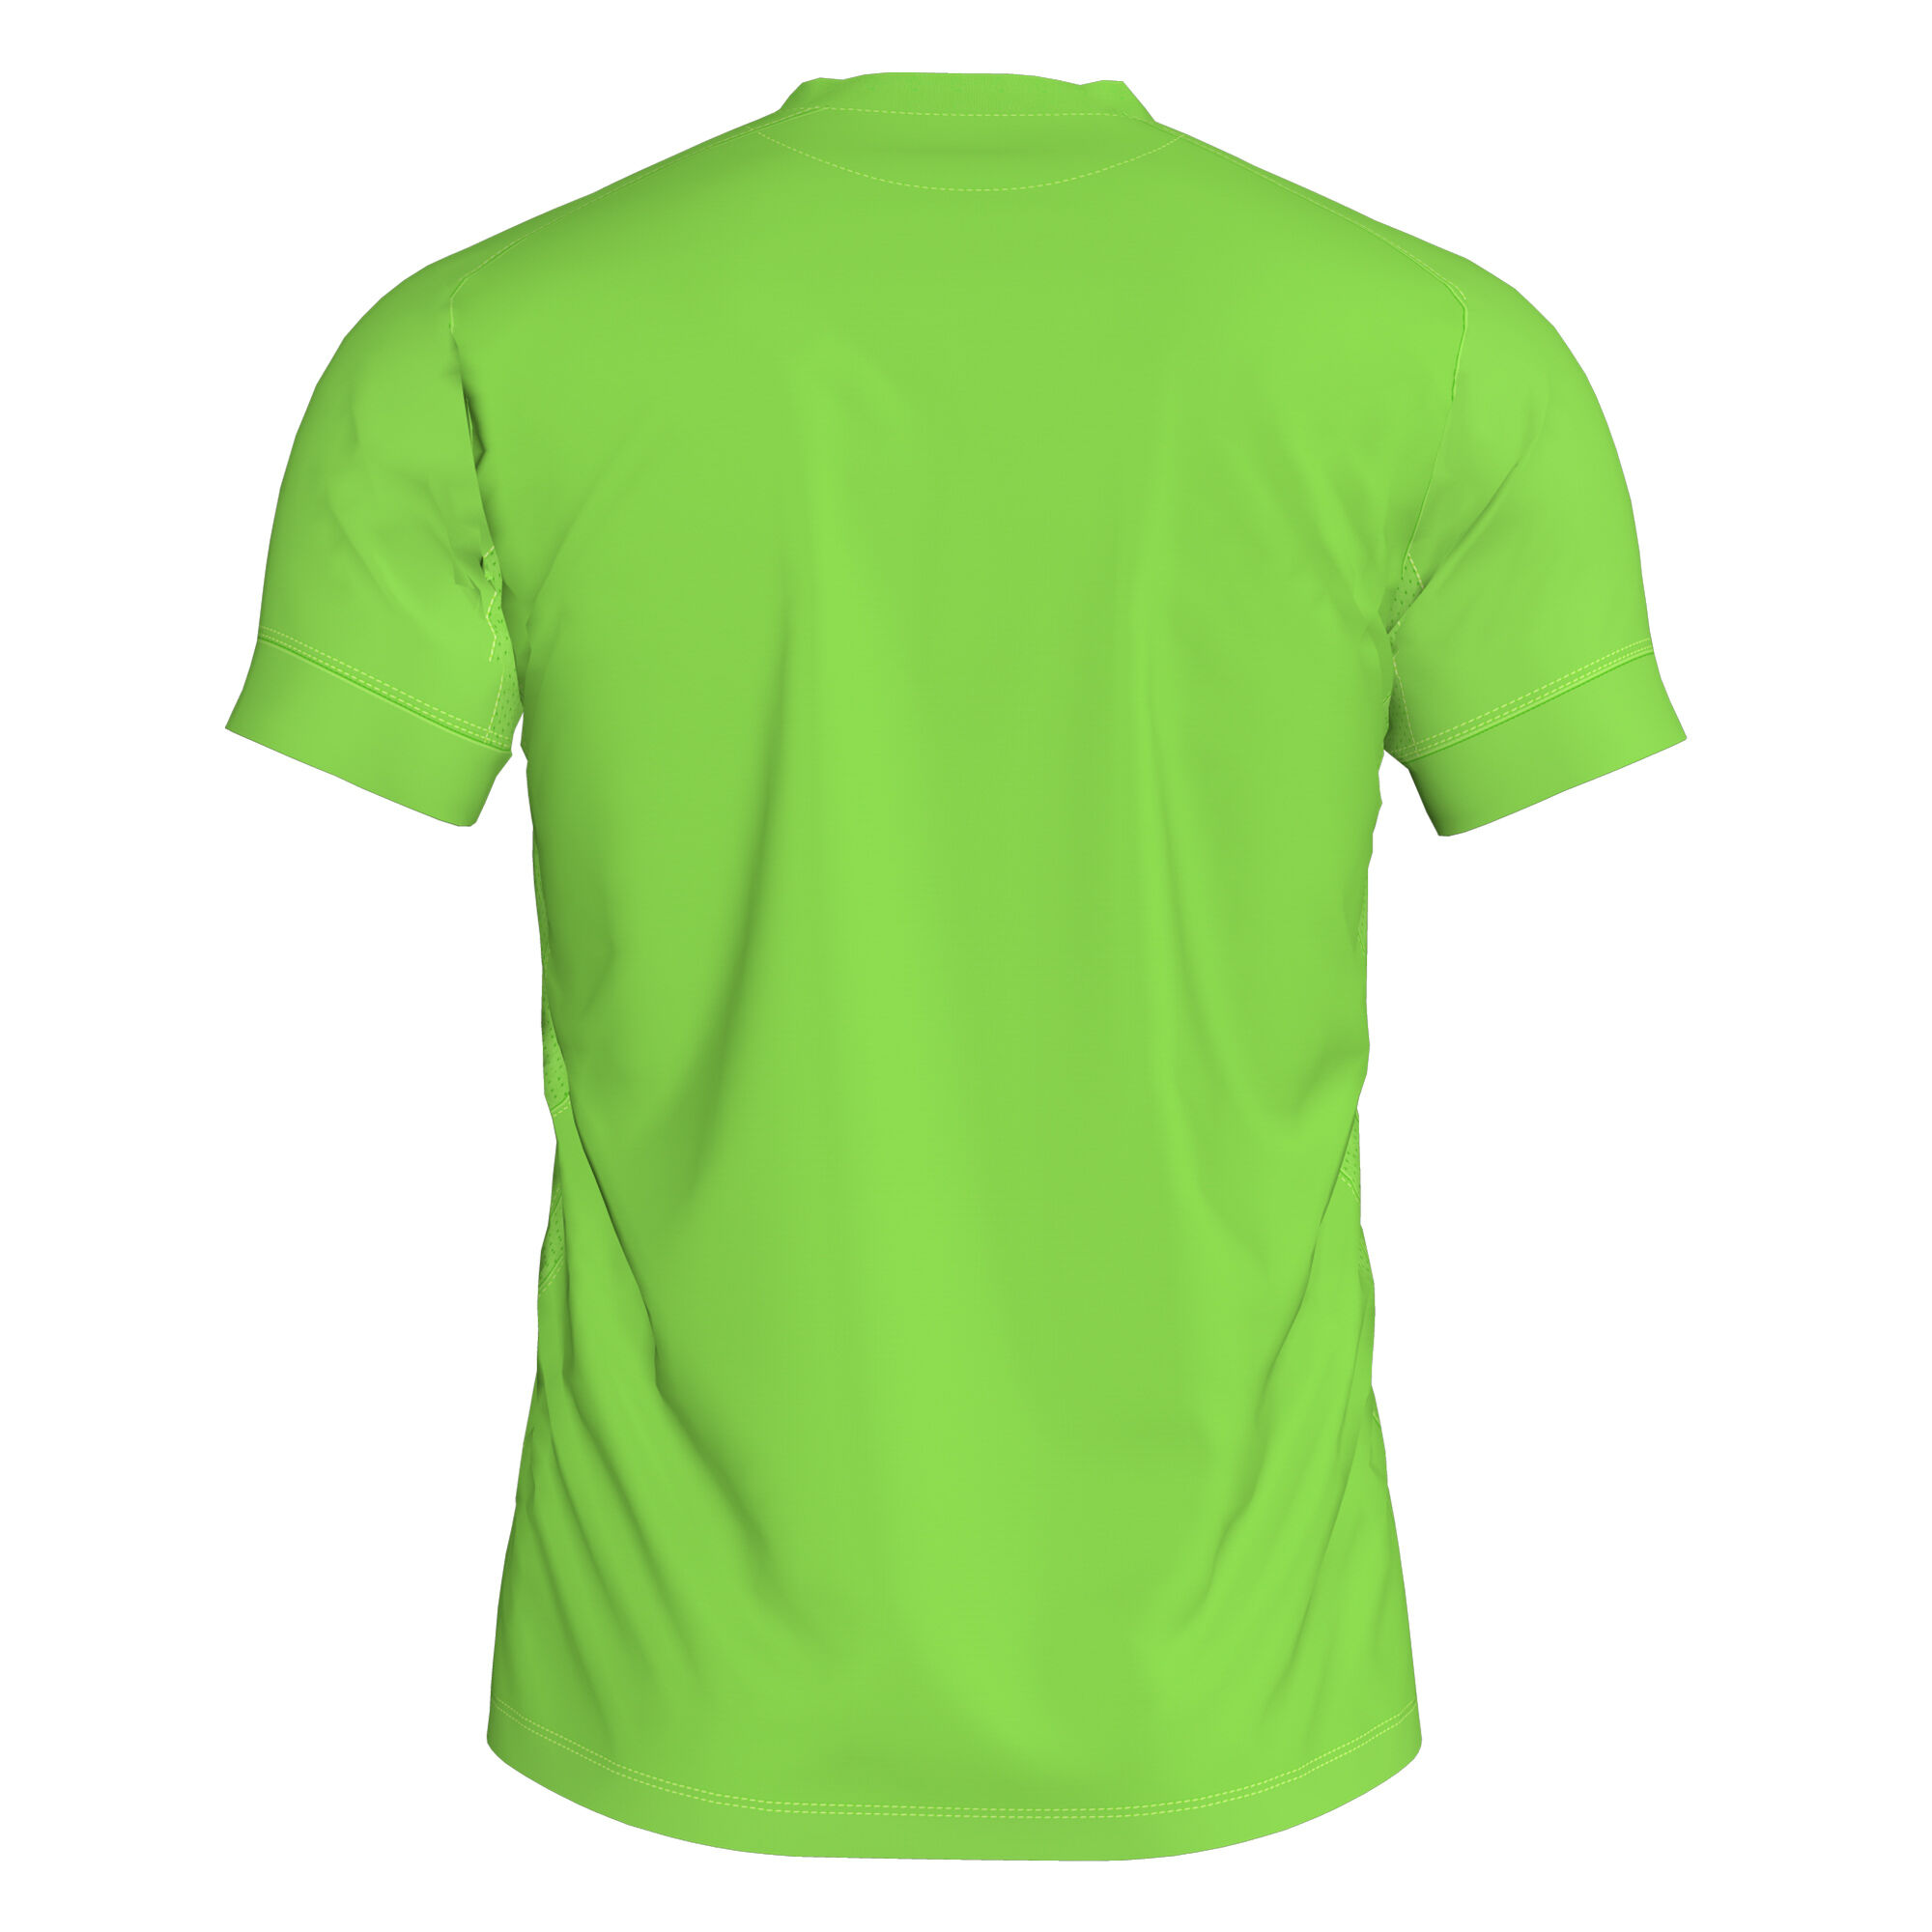 Shirt short sleeve man Olimpia fluorescent green royal blue